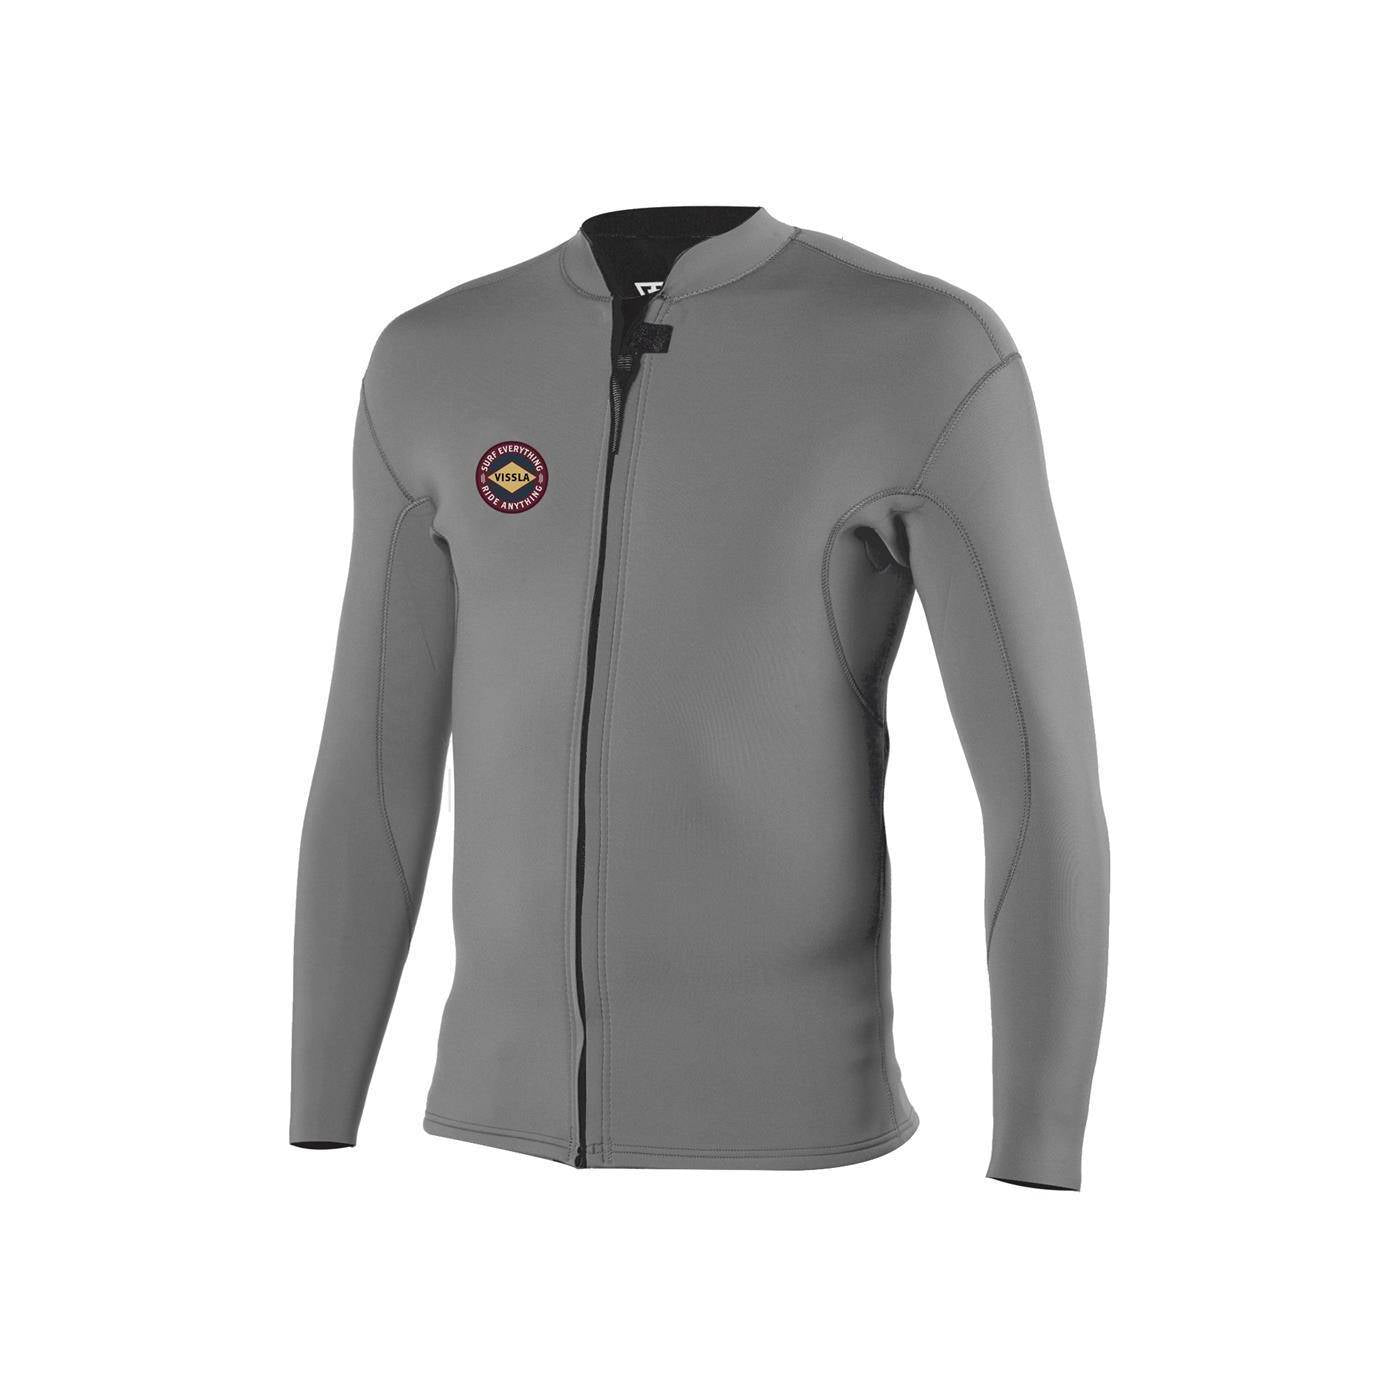 Vissla Solid Sets 2mm Front Zip Wetsuit Jacket GRY-Grey S